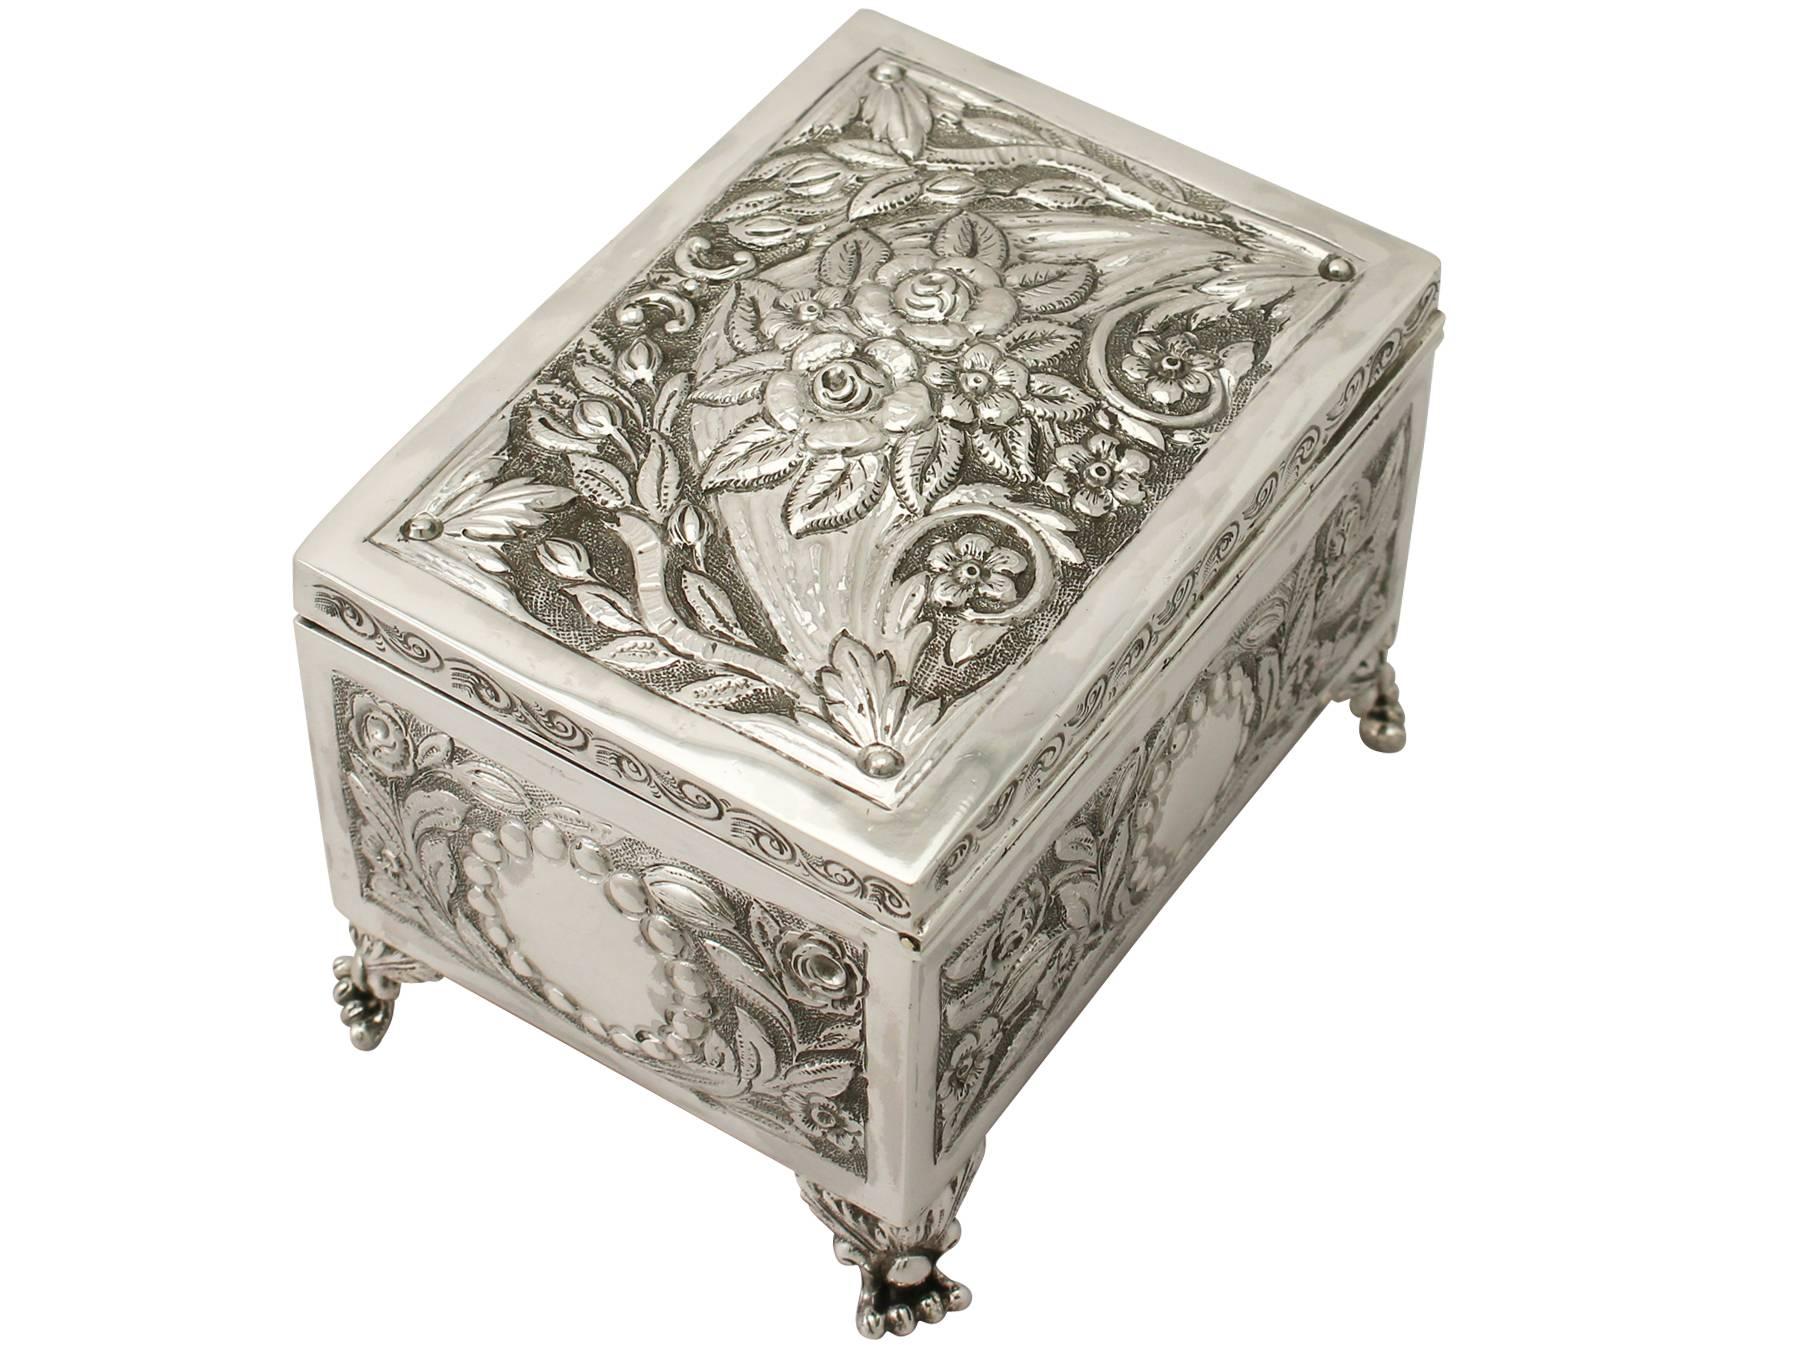 English Sterling Silver Box/Jewelry Casket - Antique Edwardian